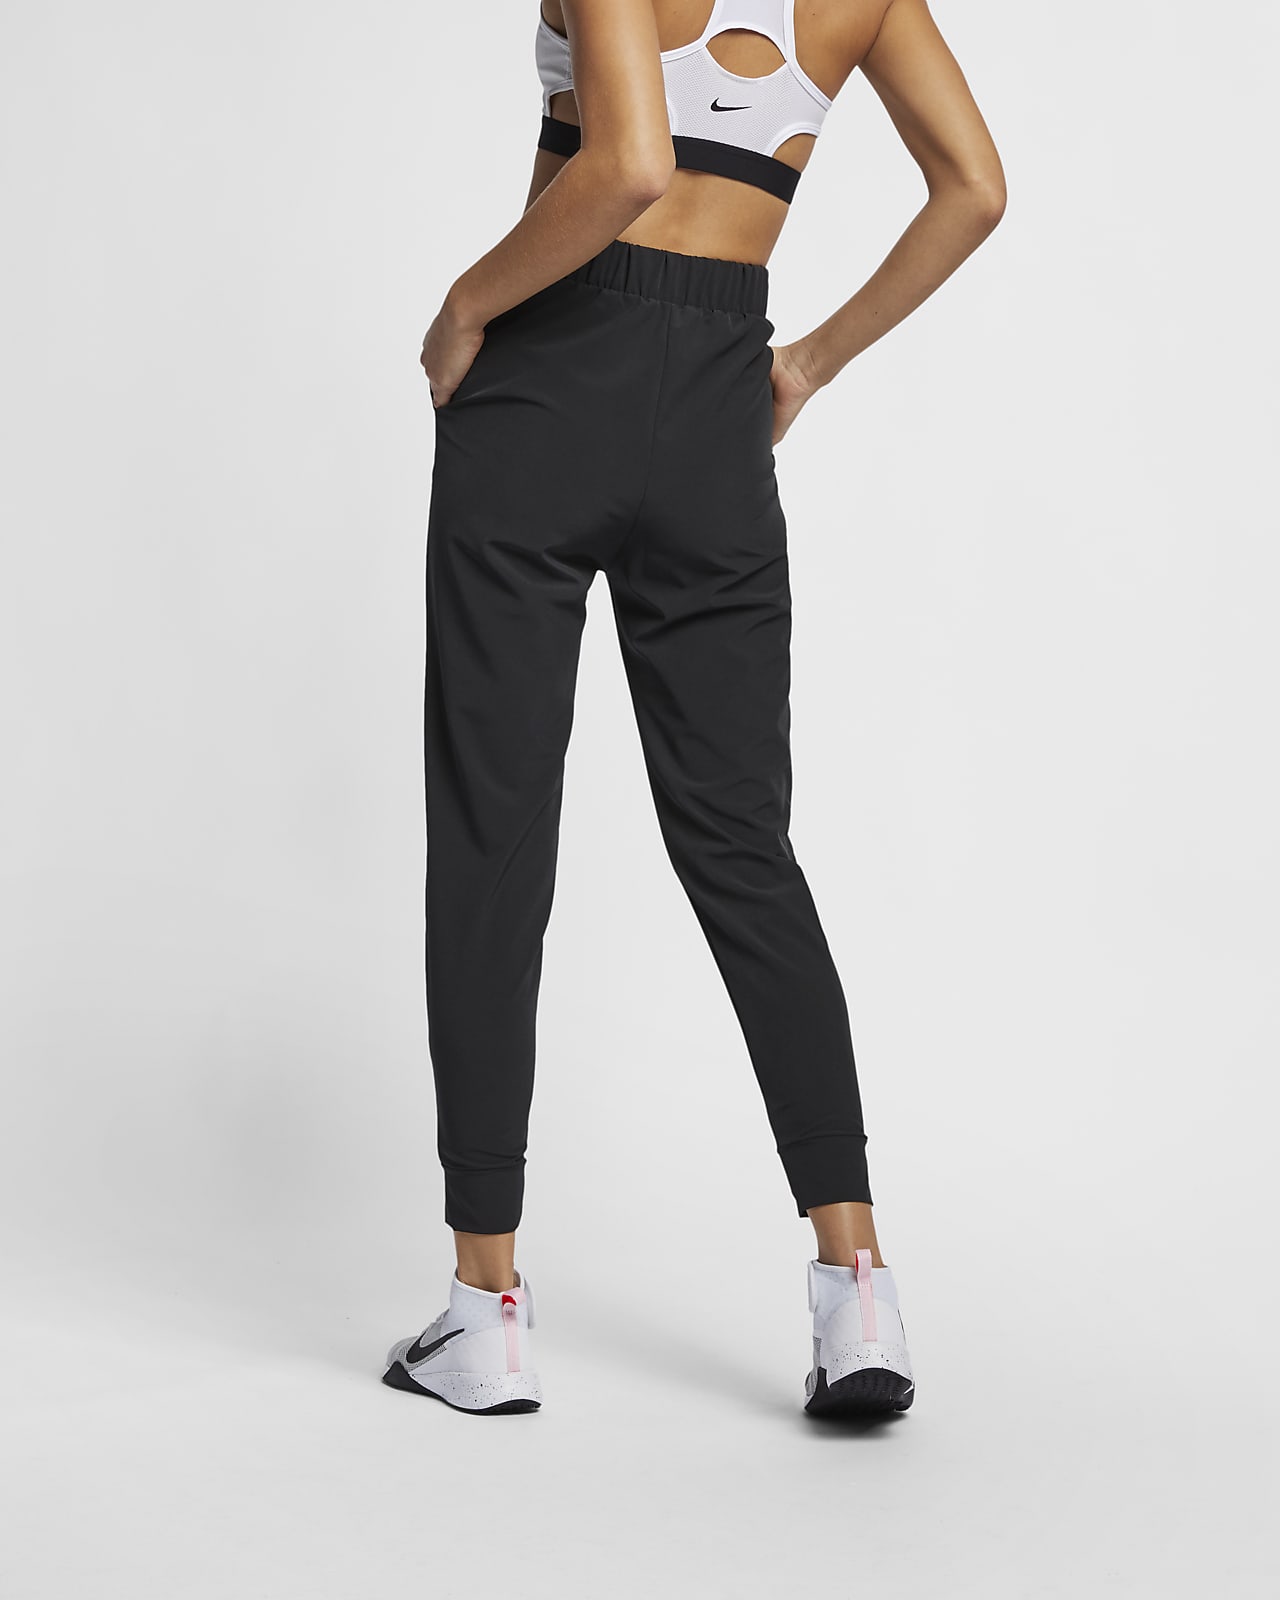 Nike Bliss Women's Training Trousers 